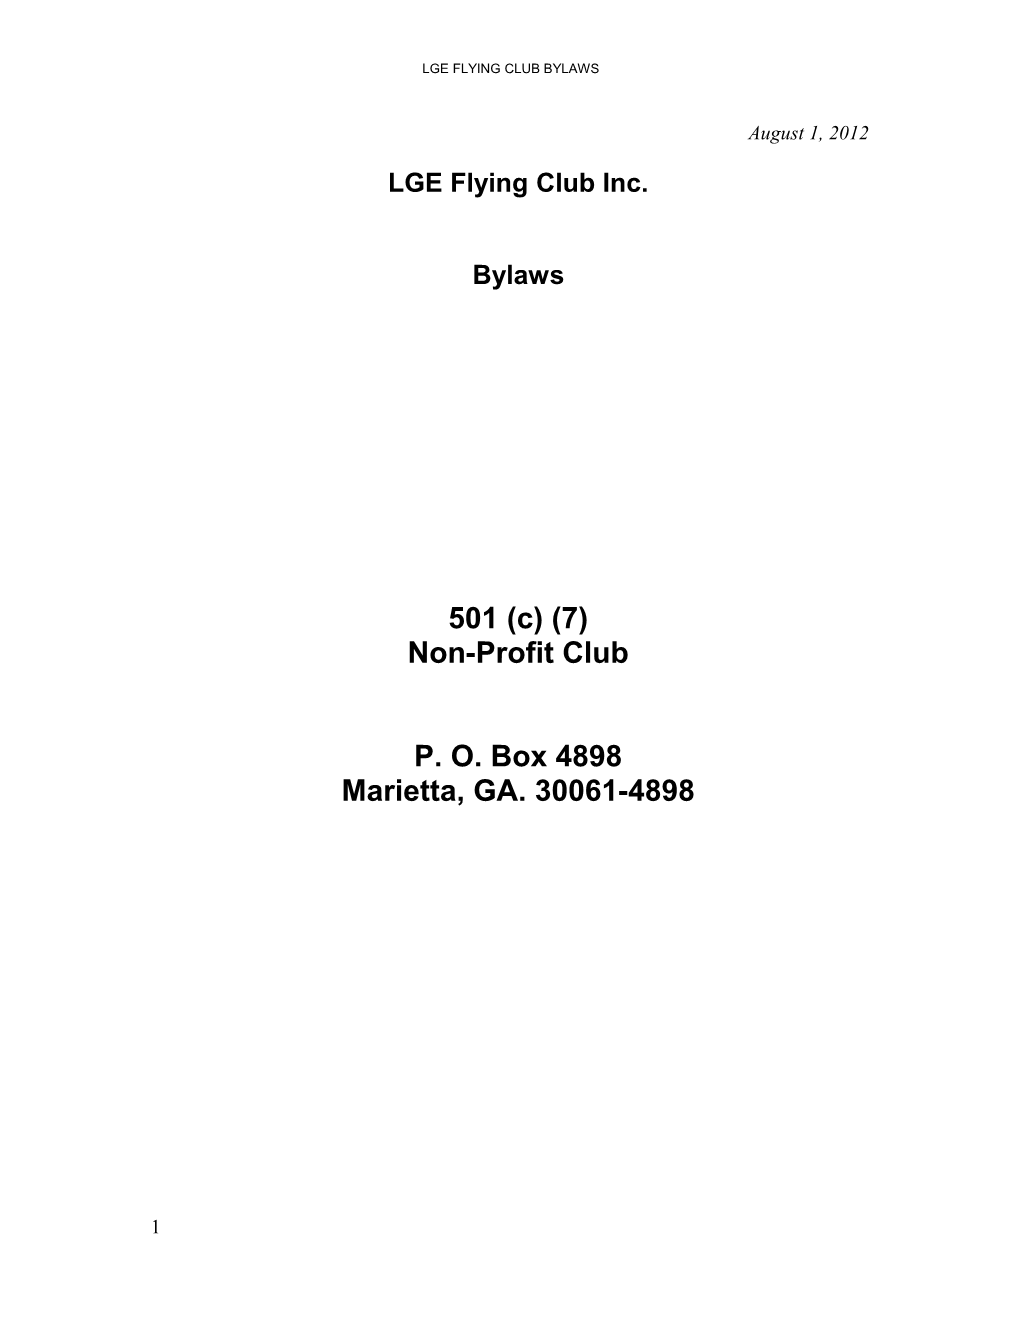 LGE Flying Club Inc